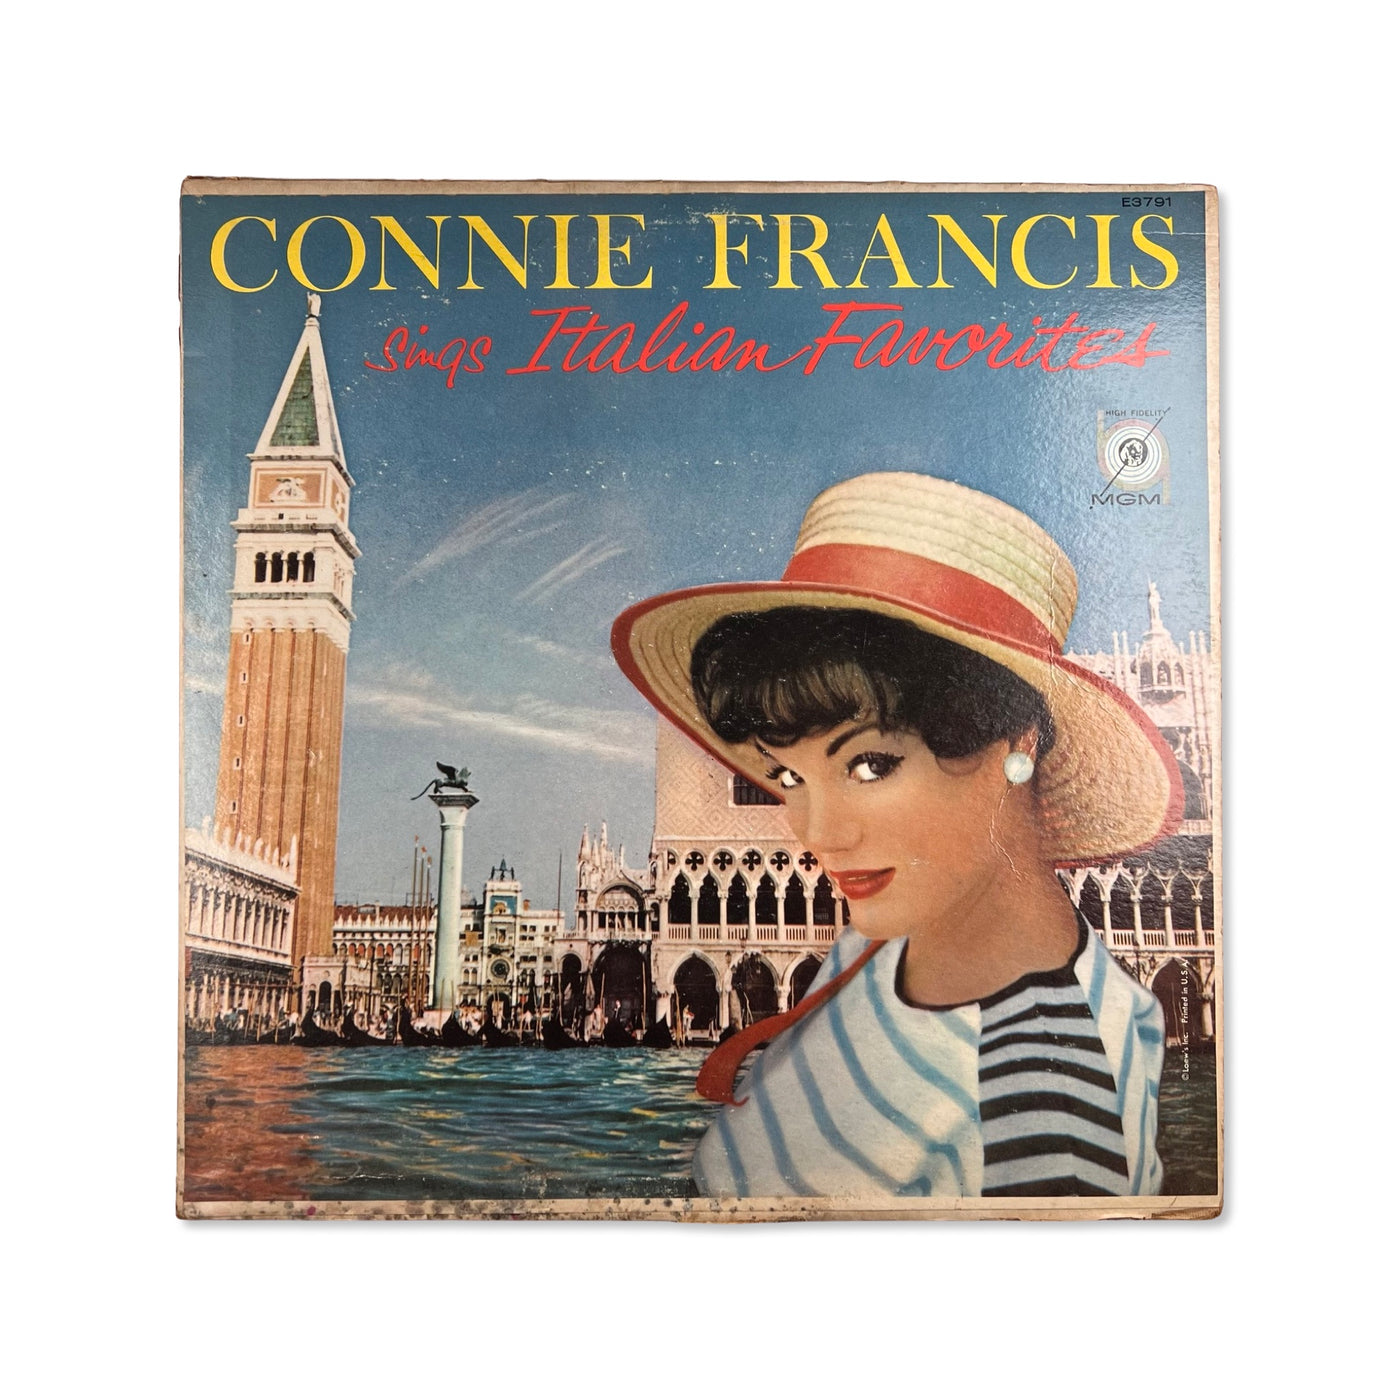 Connie Francis – Sings Italian Favorites